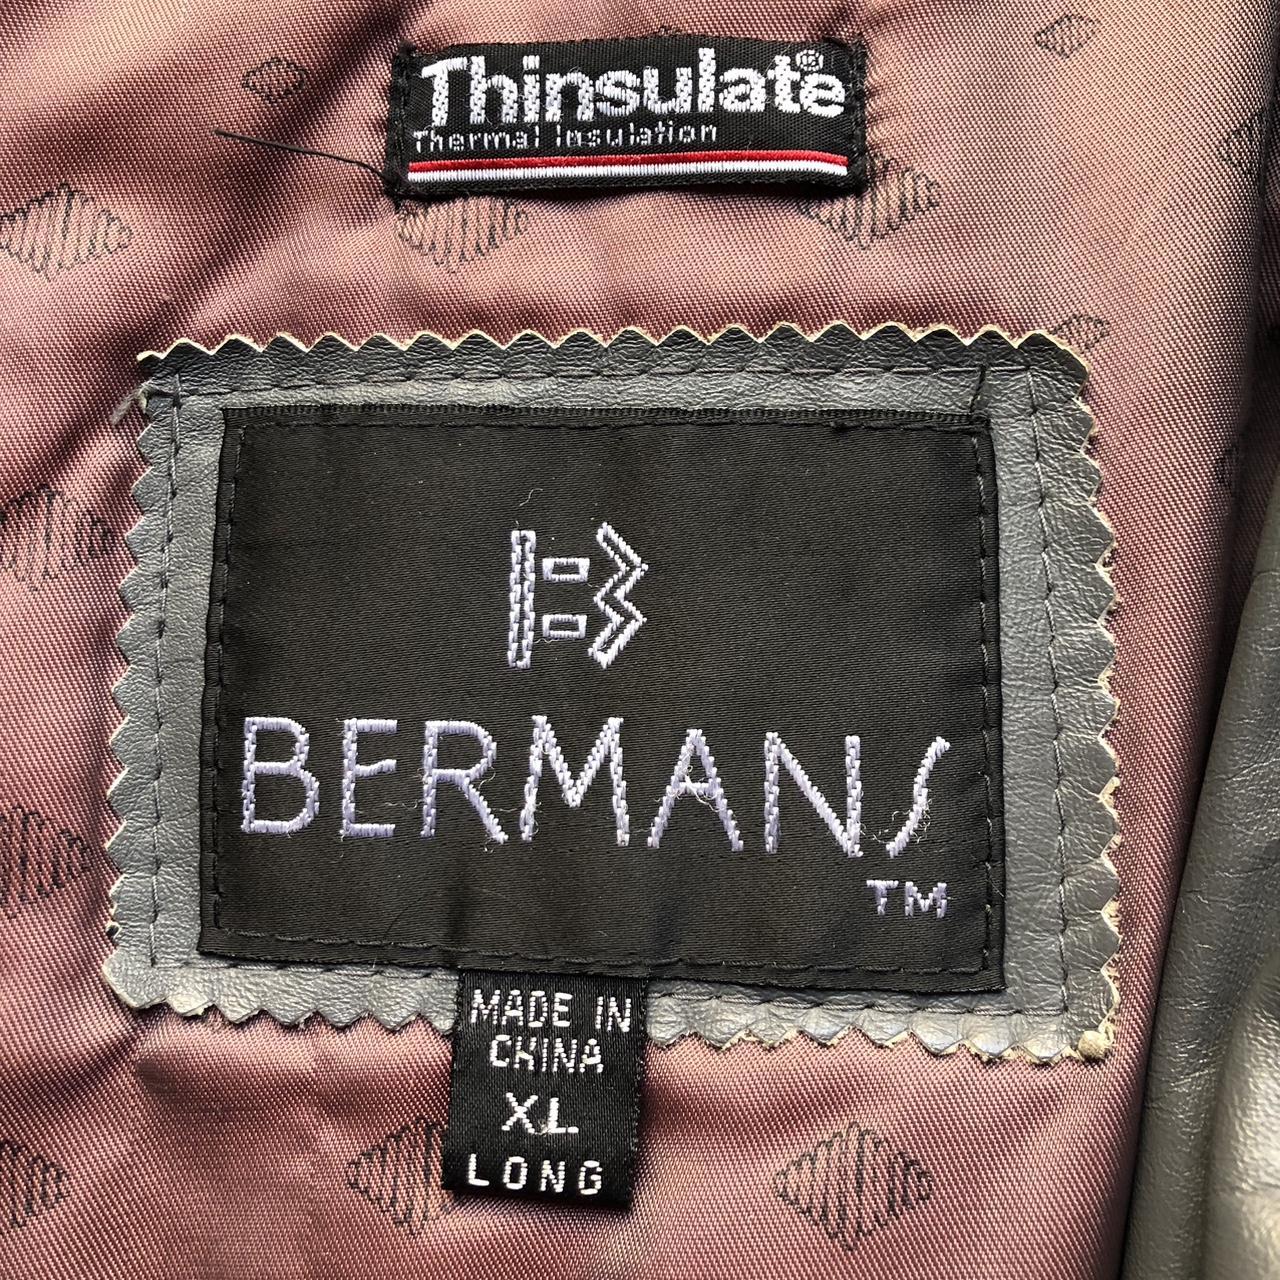 Product Image 2 - Bermans Leather Jacket
size XL 
no